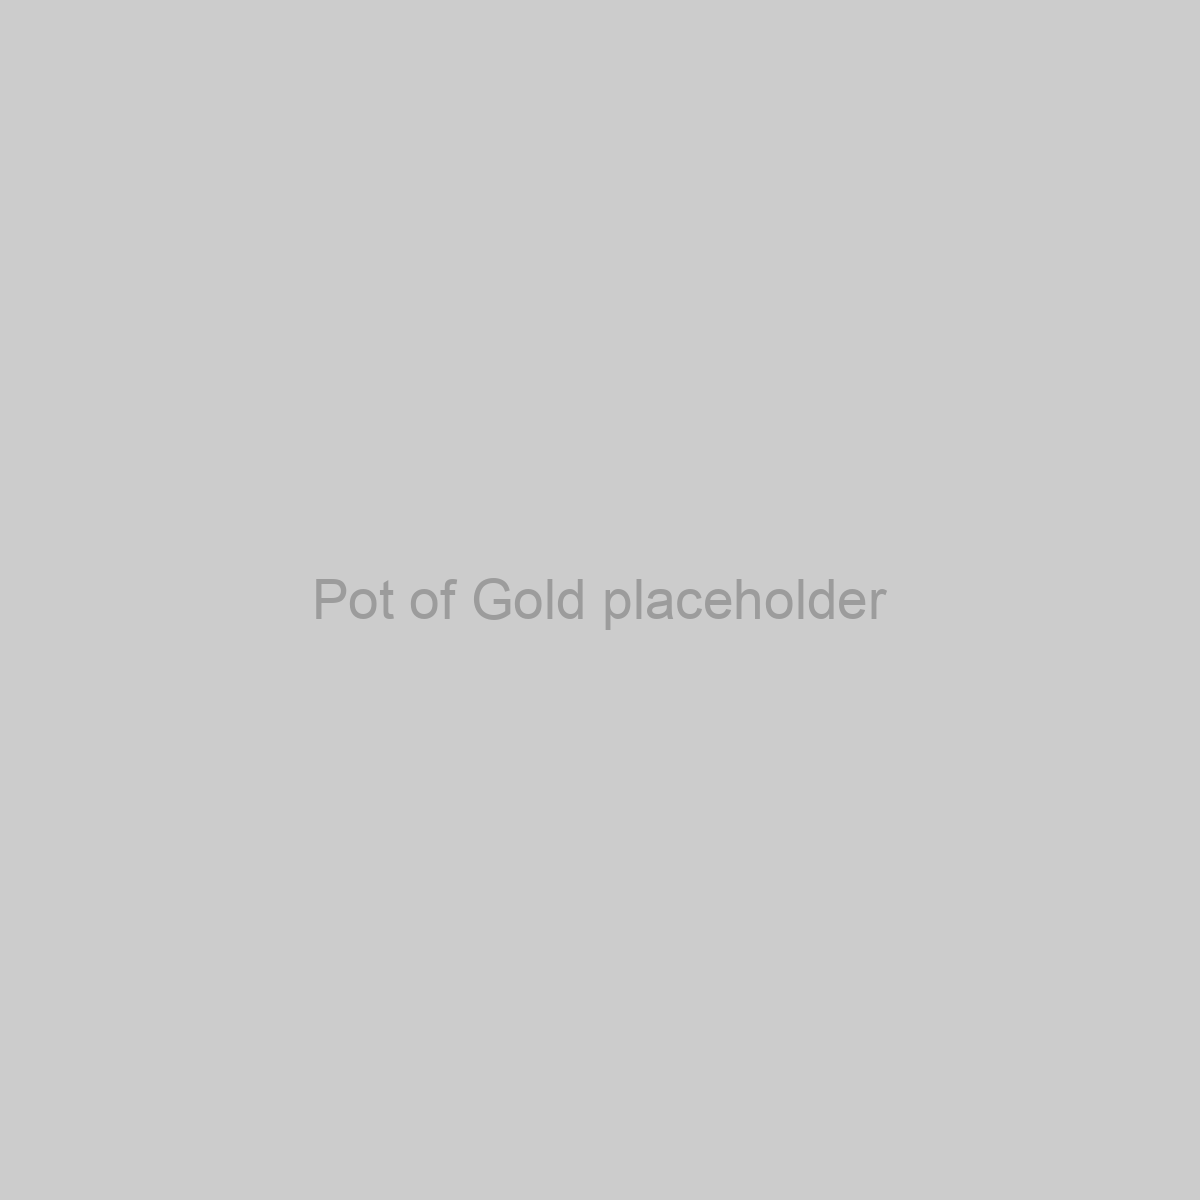 Pot of Gold Placeholder Image